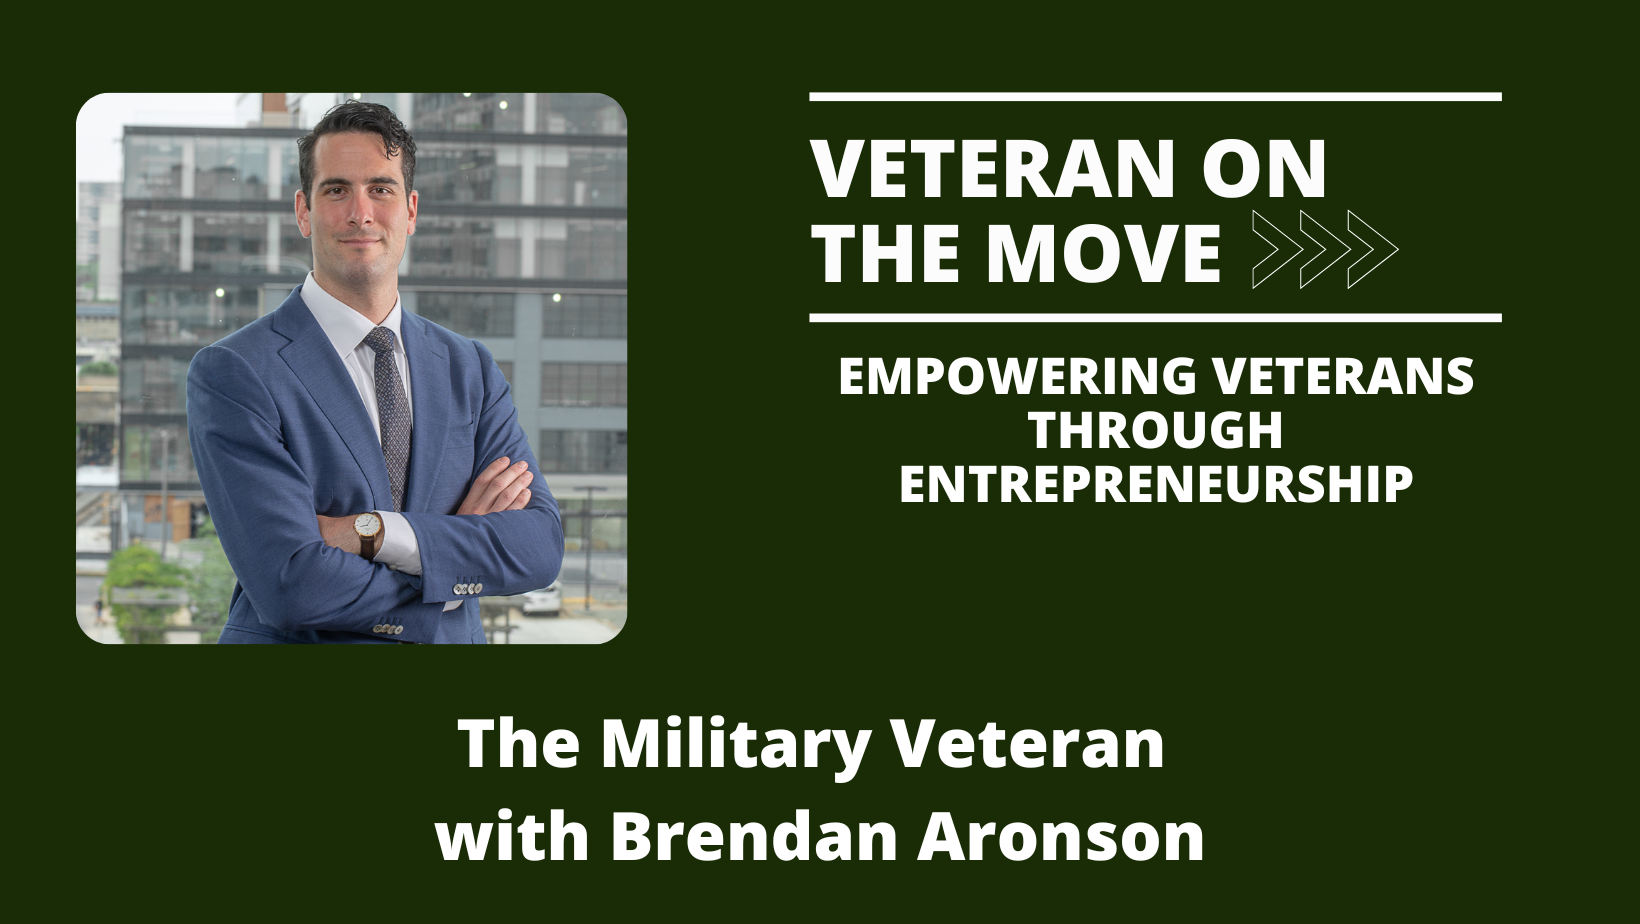 Brendan Aronson; Veteran On the Move